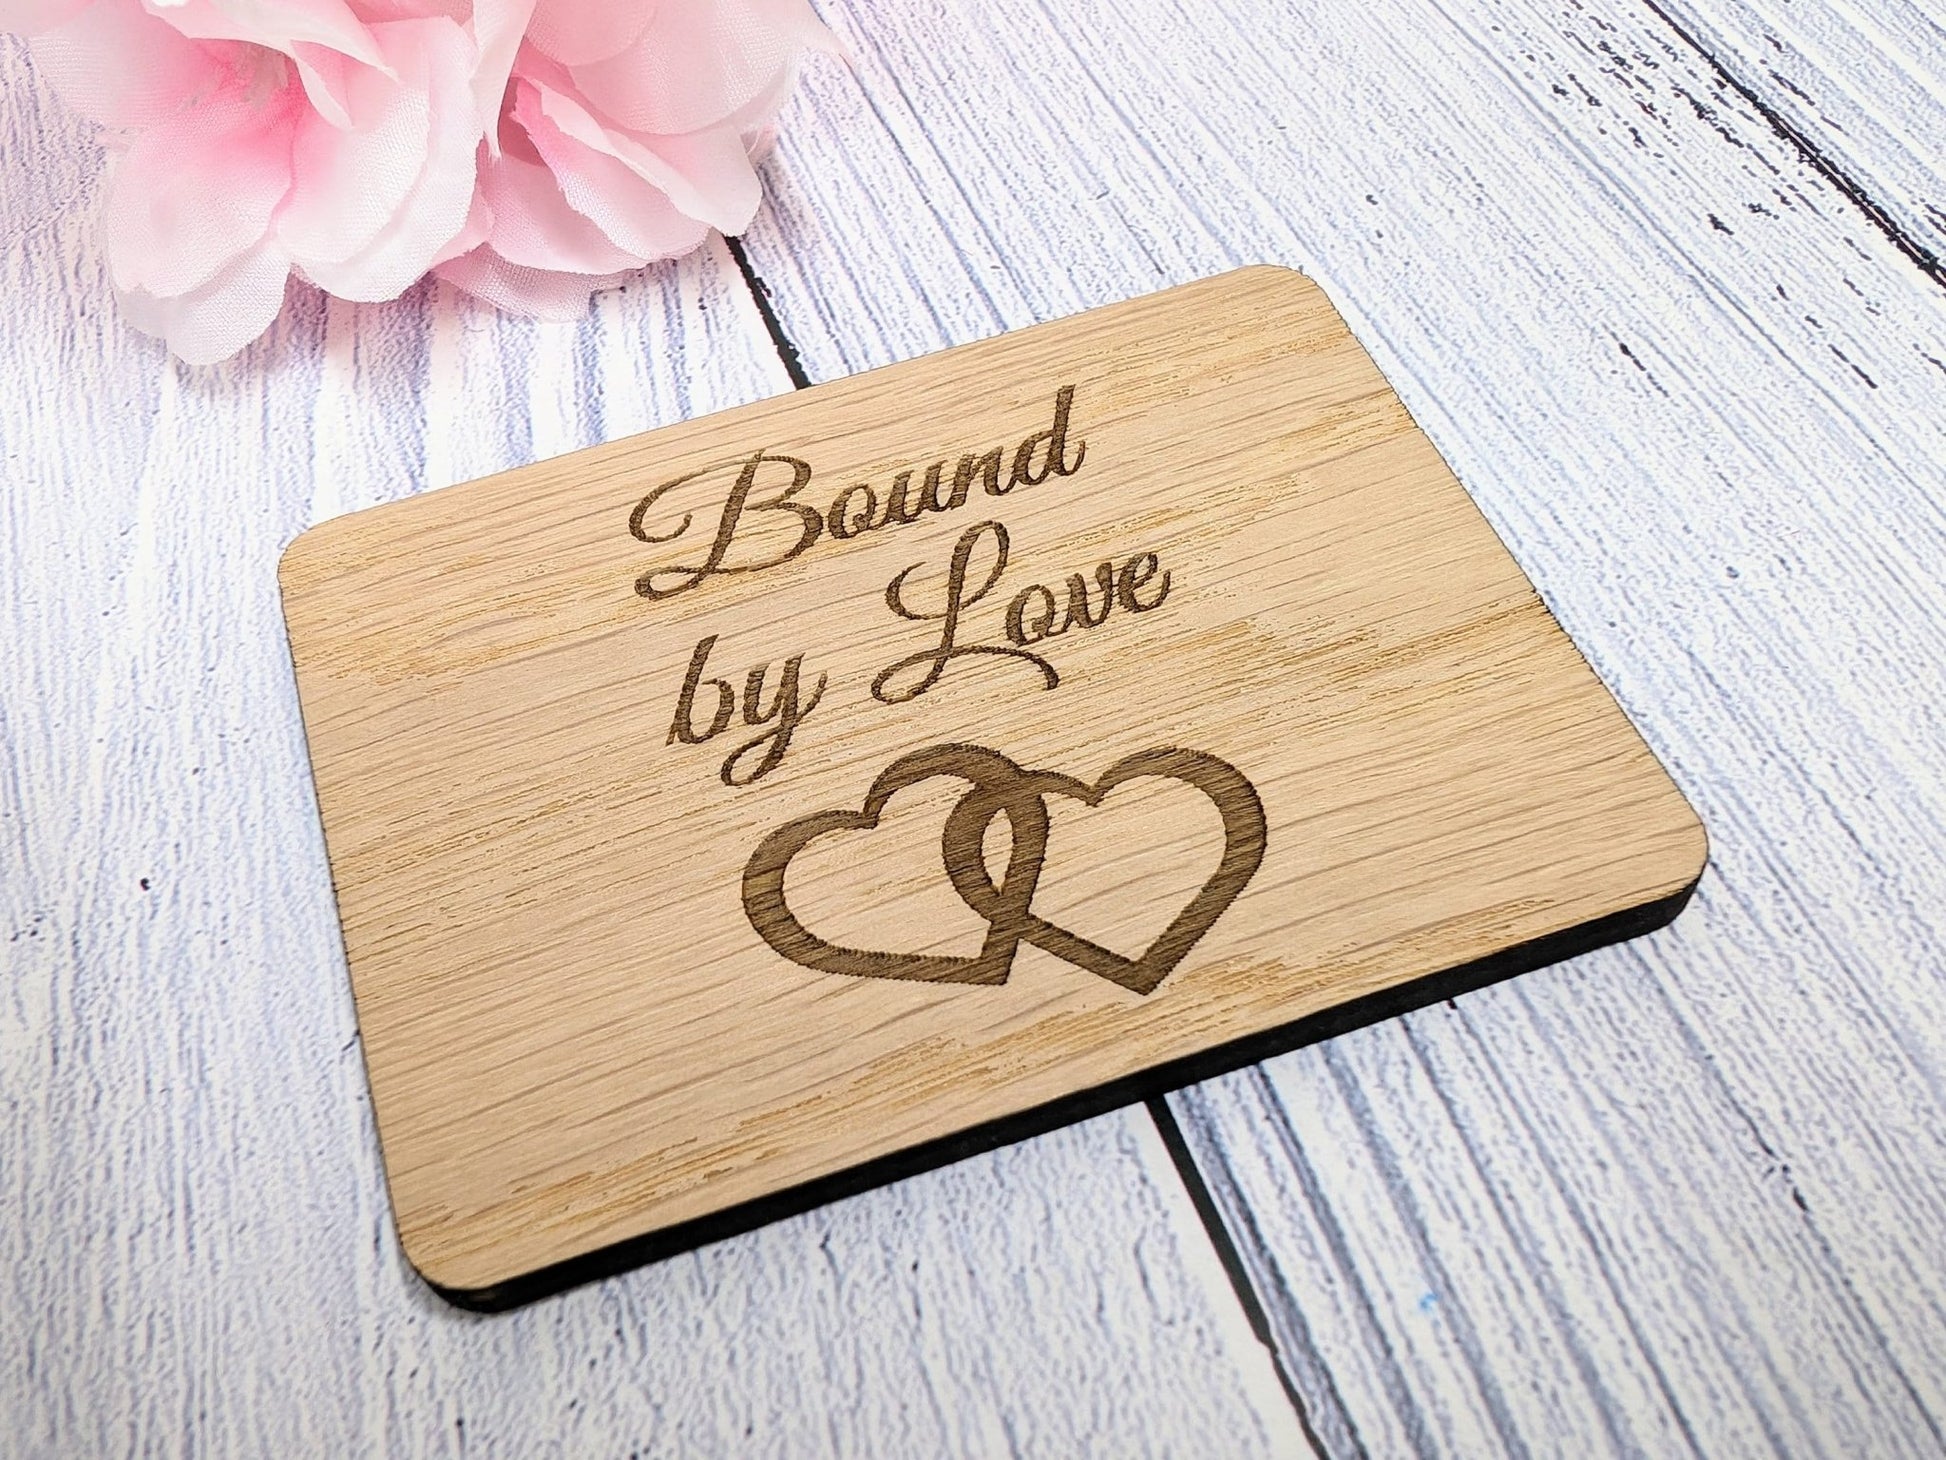 Bound By Love - Wooden Fridge Magnet with Interlocking Hearts - Romantic Gift - CherryGroveCraft